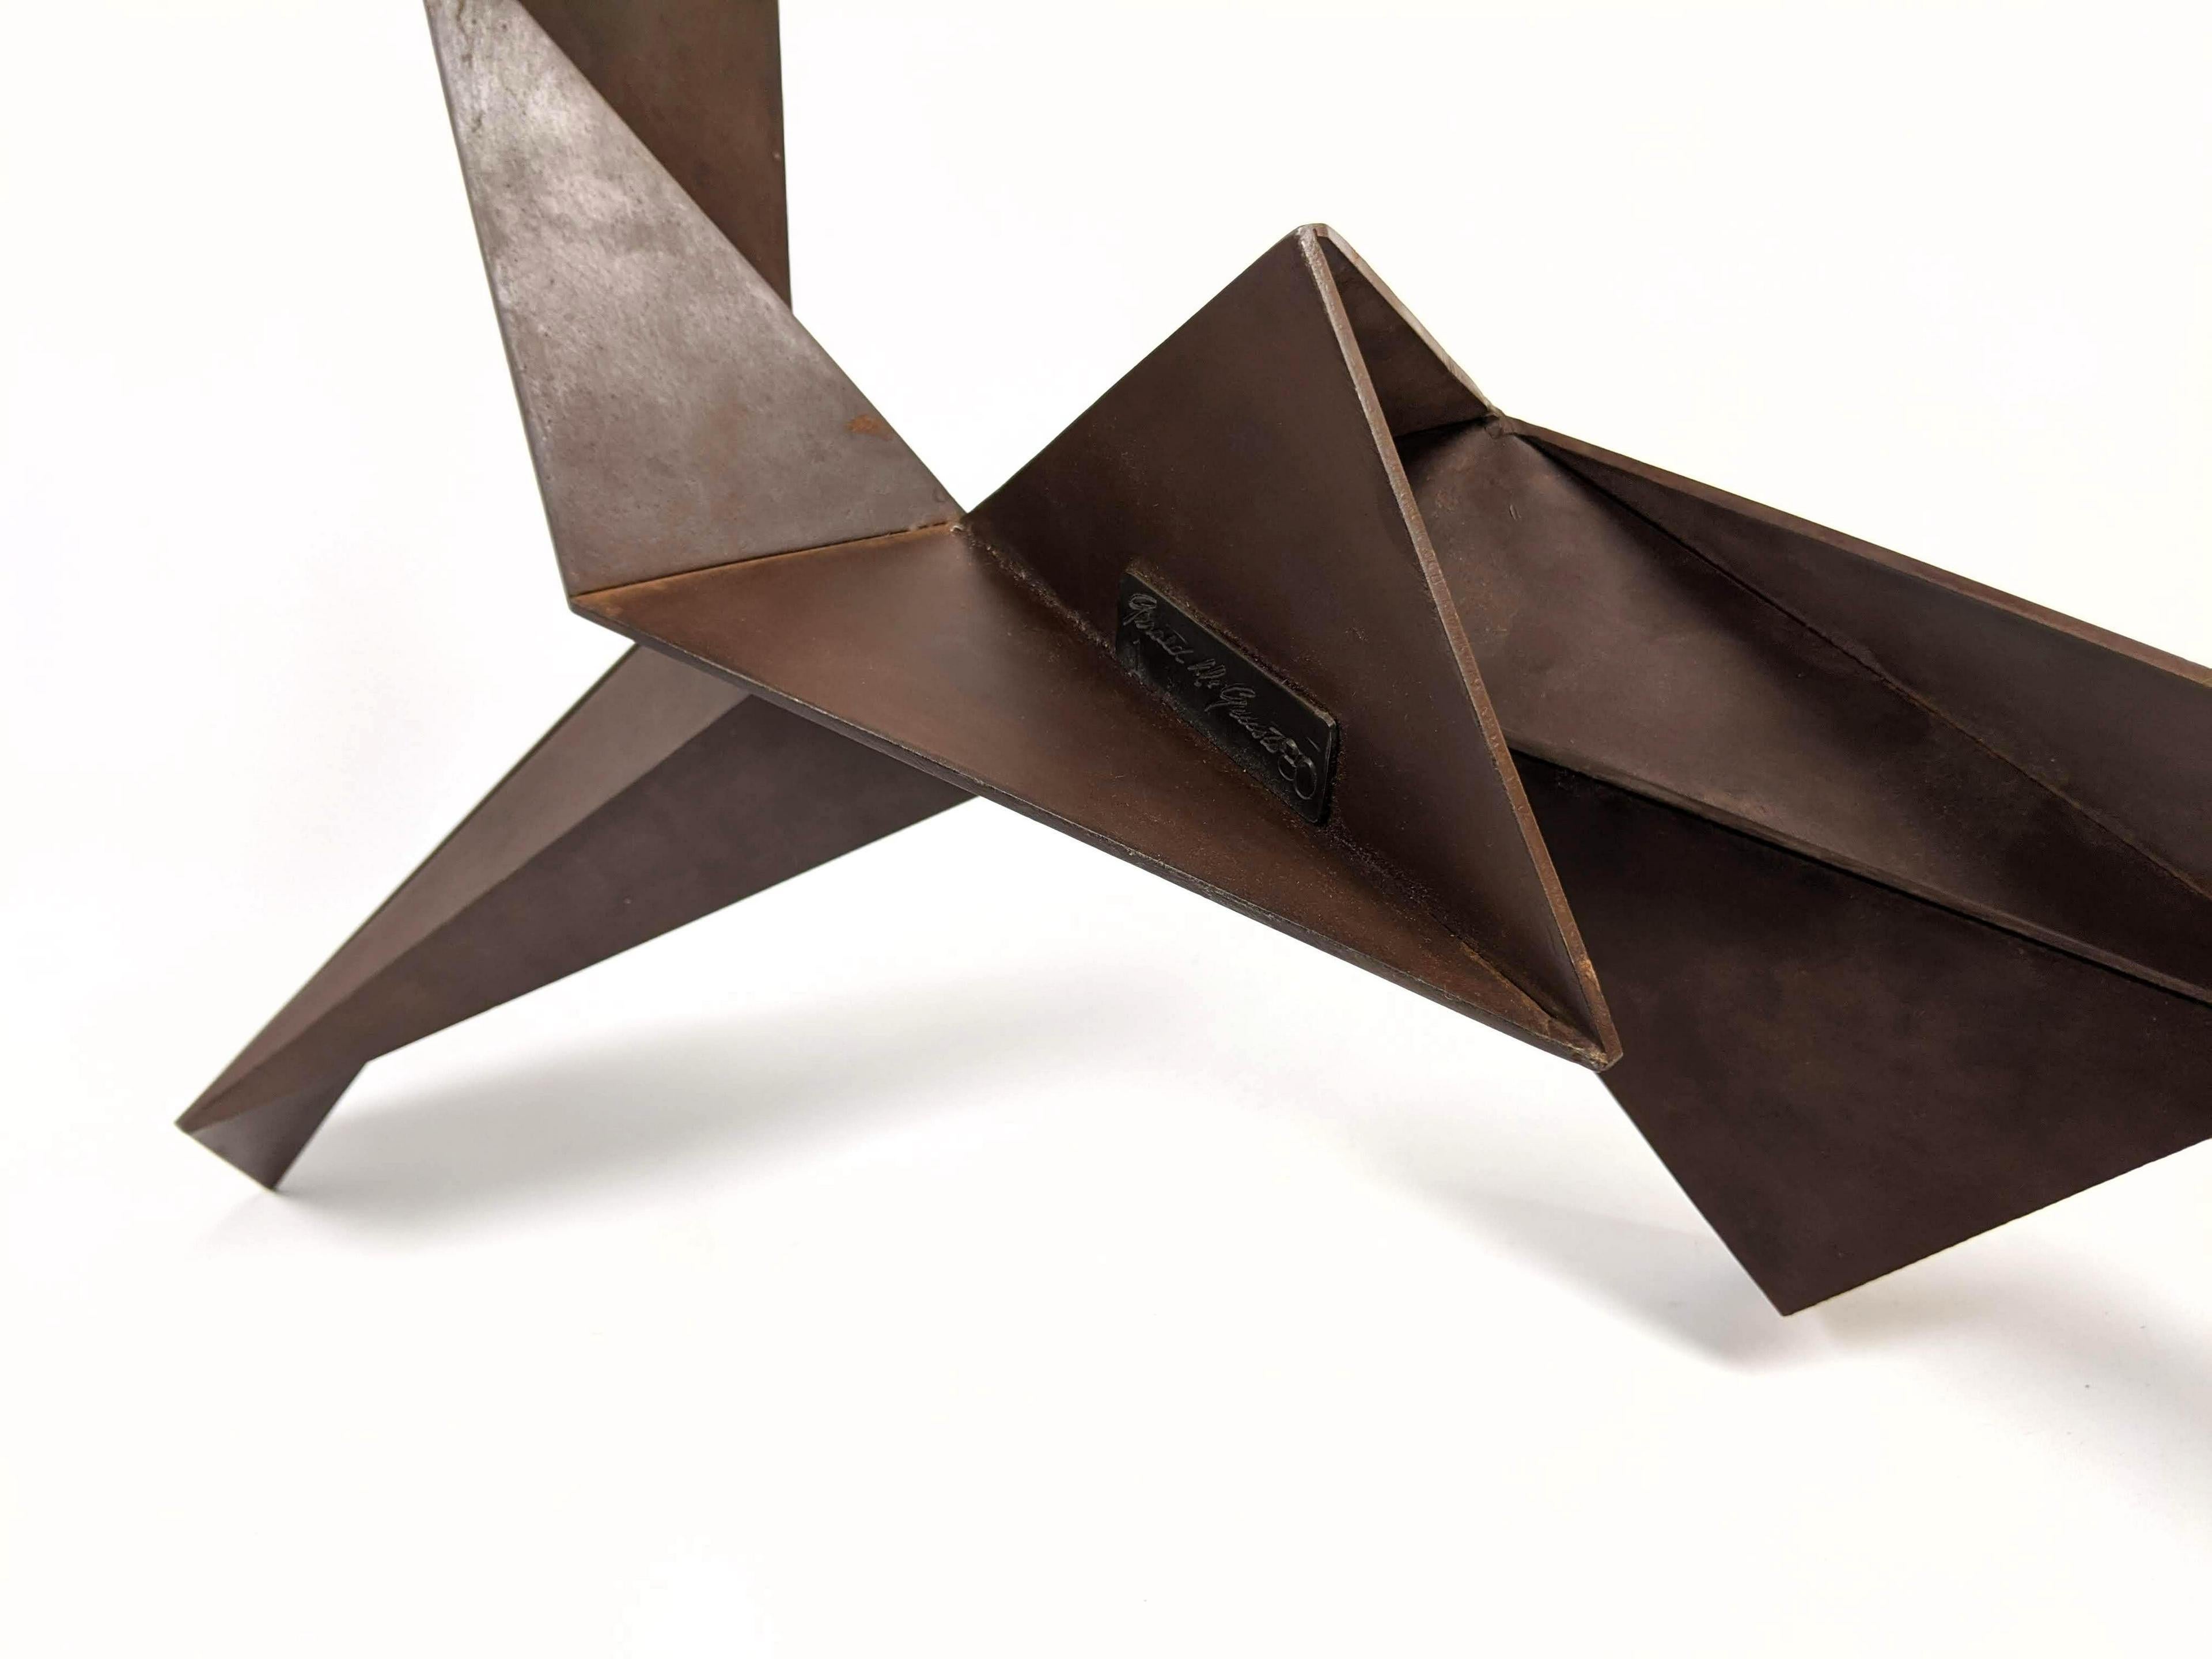 Corten Steel Abstract Geometric Folded Origami Sculpture Gerald DiGiusto  5